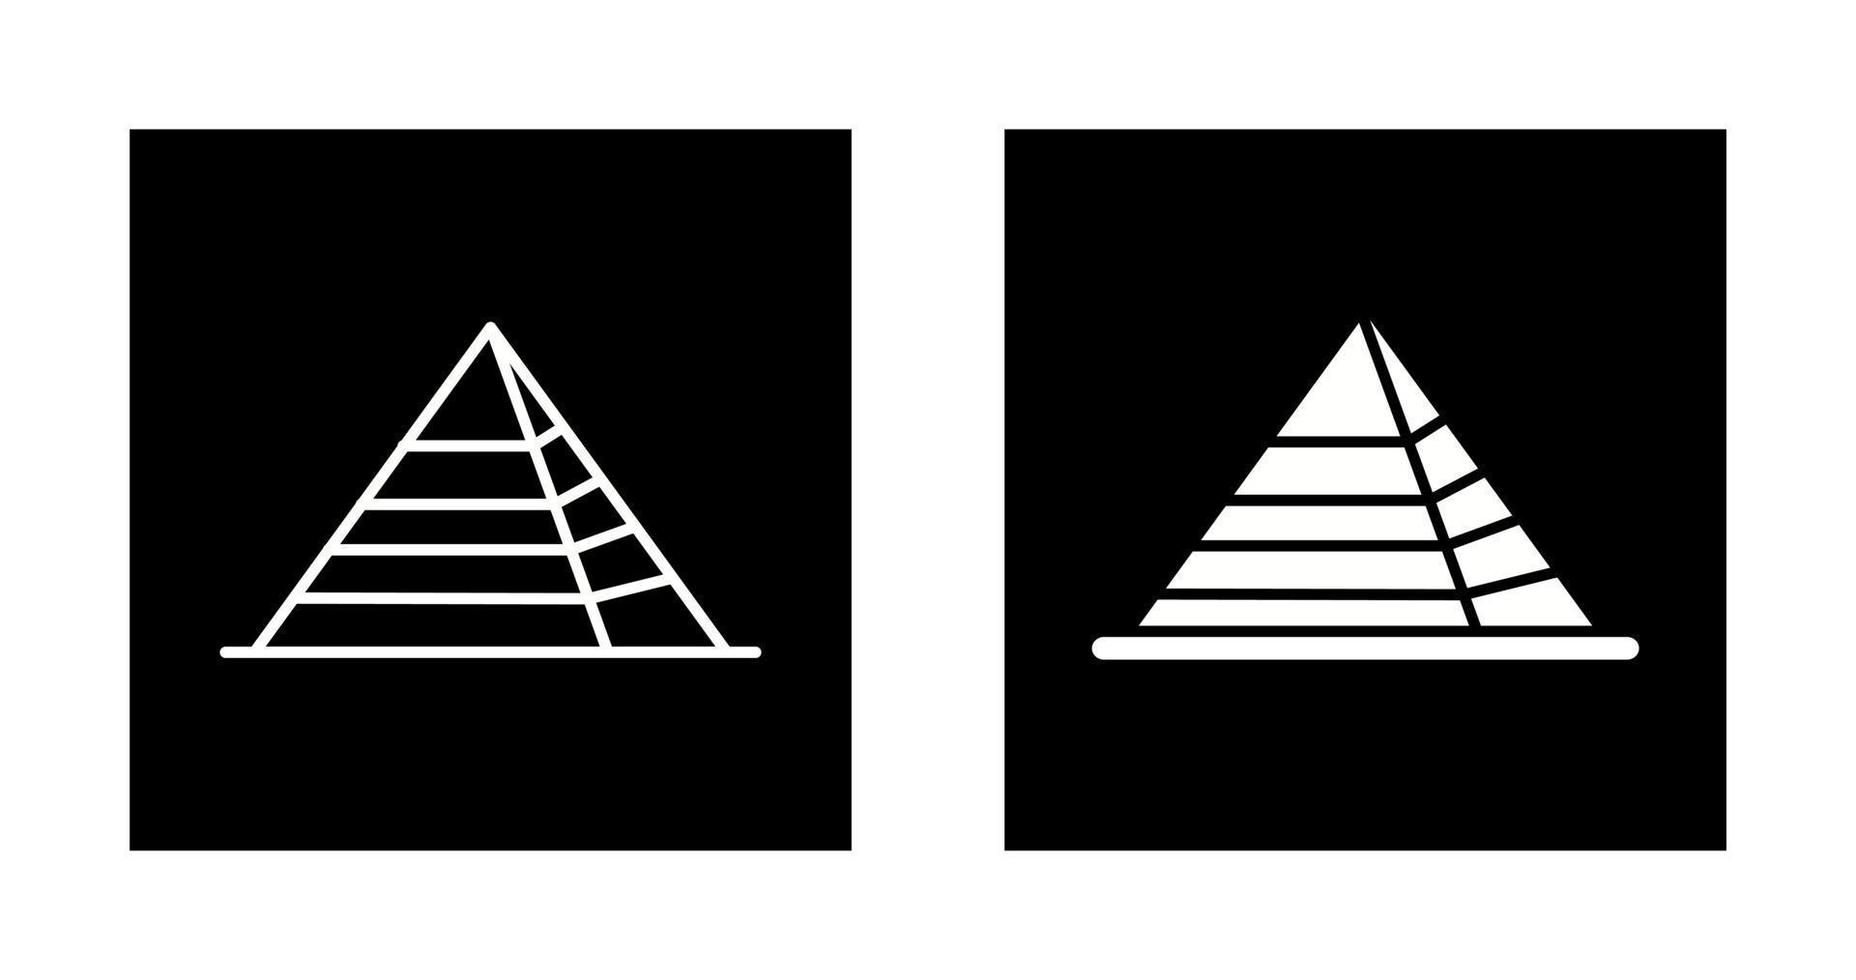 pyramid vektor ikon